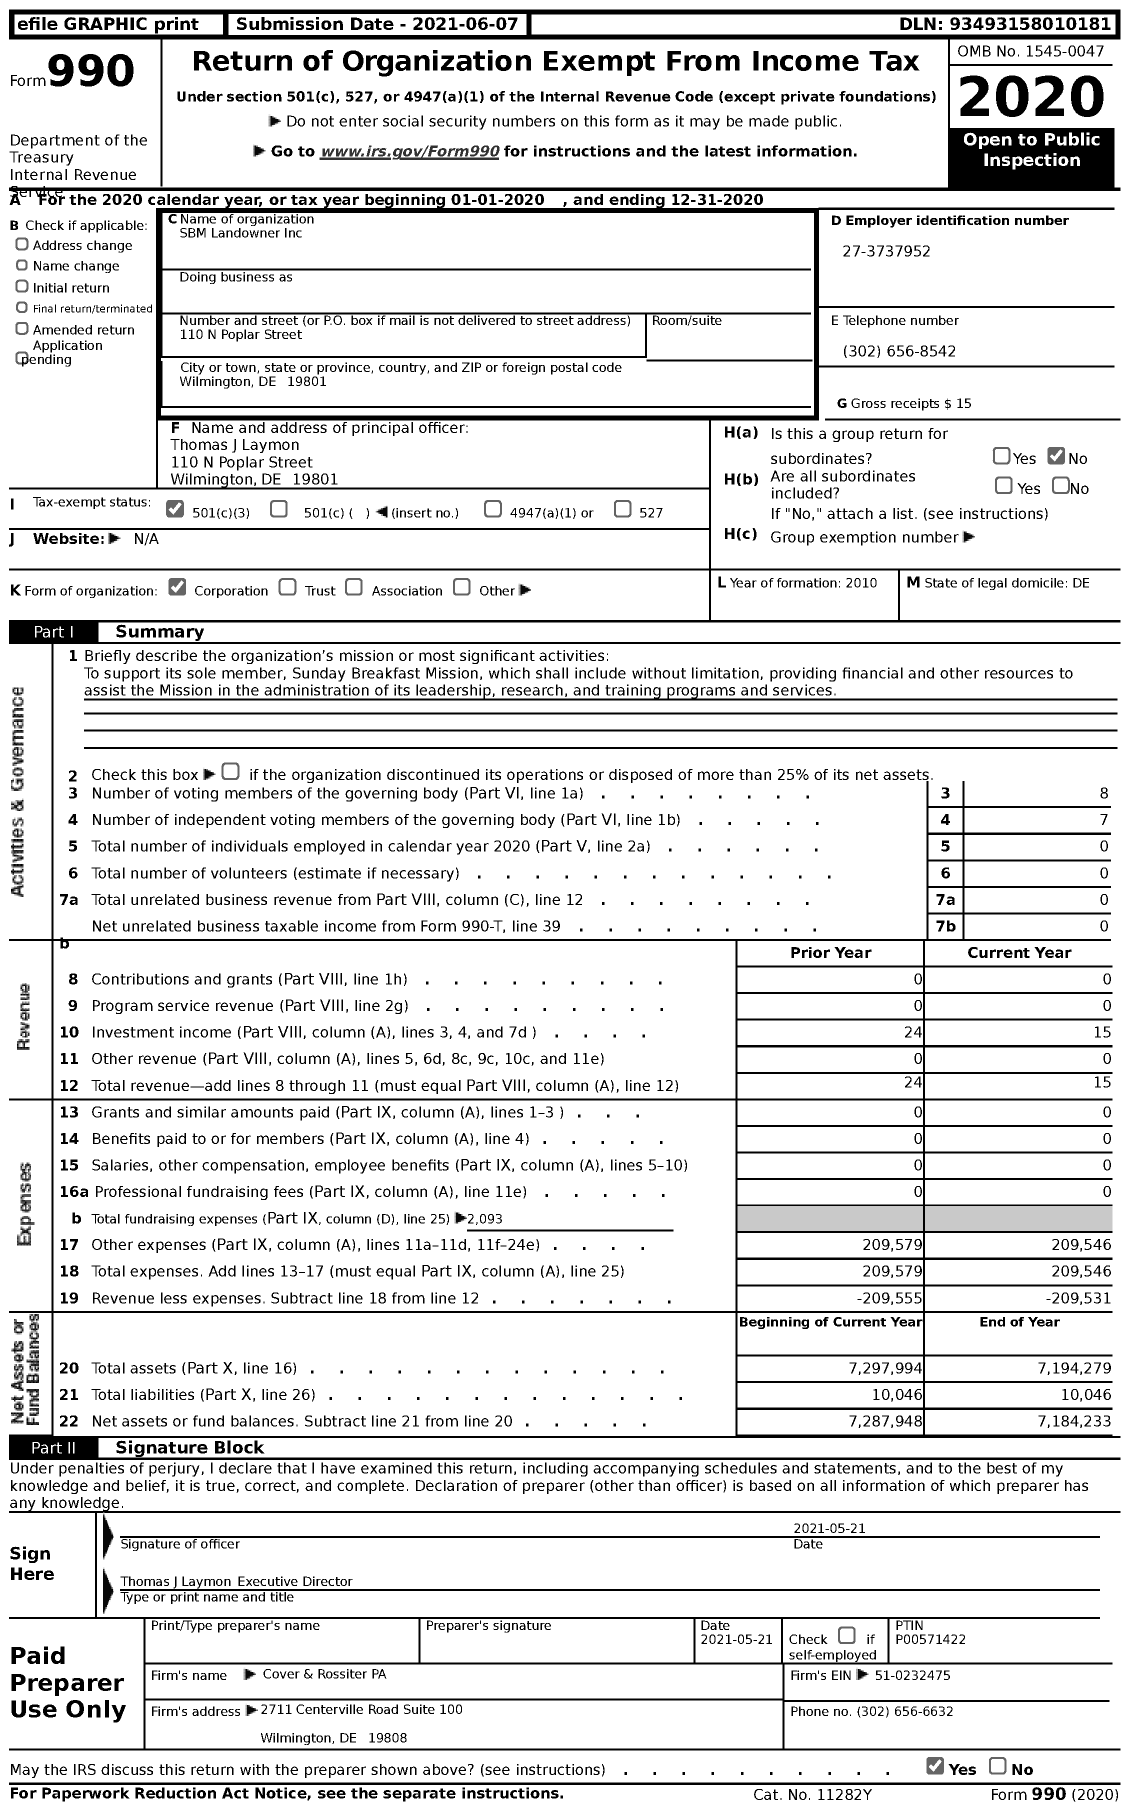 Image of first page of 2020 Form 990 for SBM Landowner